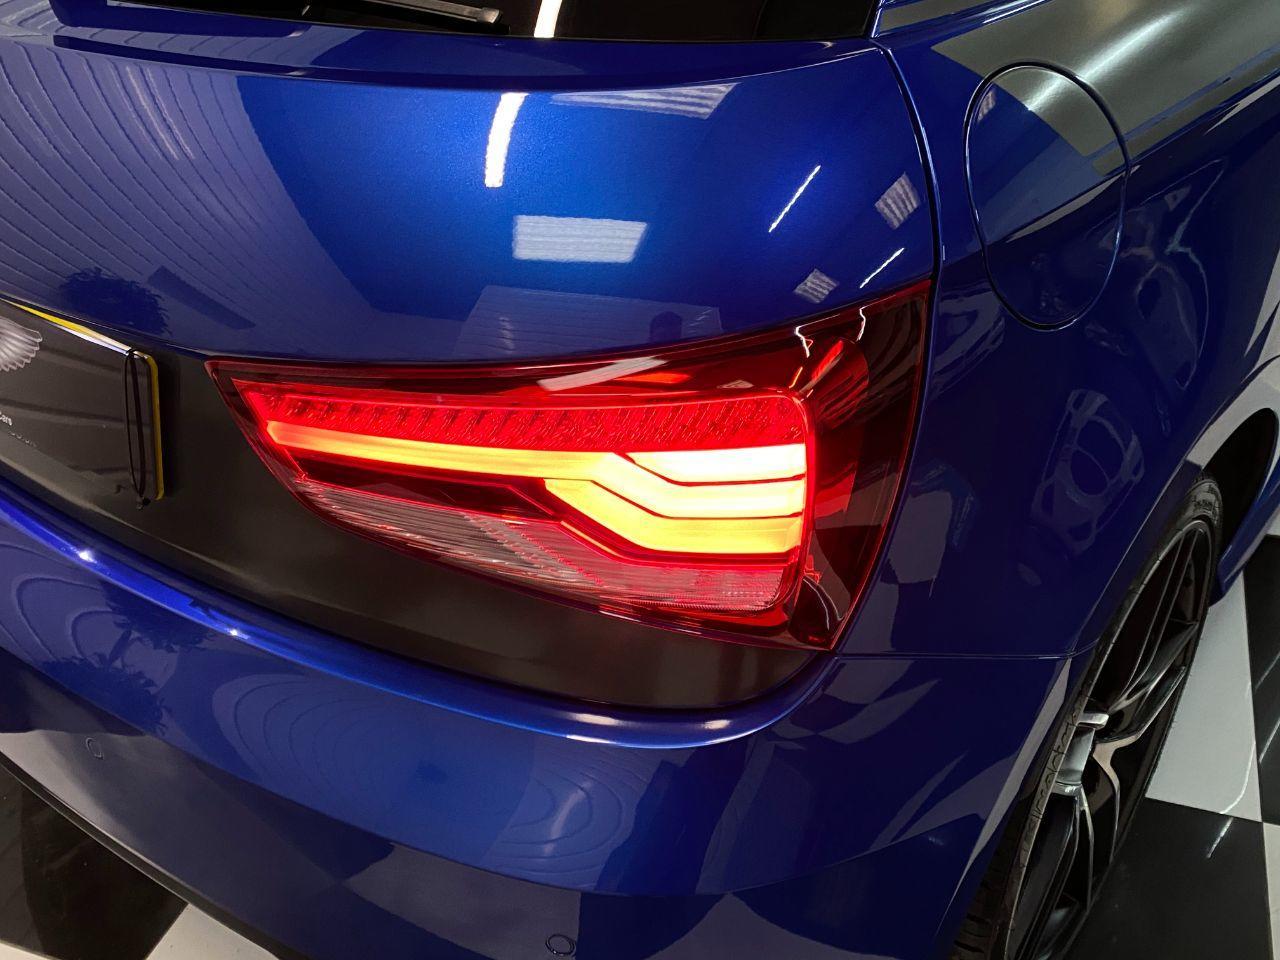 Audi A1 S1 2.0 TFSI Quattro Competition 3dr Hatchback Petrol Sepang Blue Pearl Effect Paint